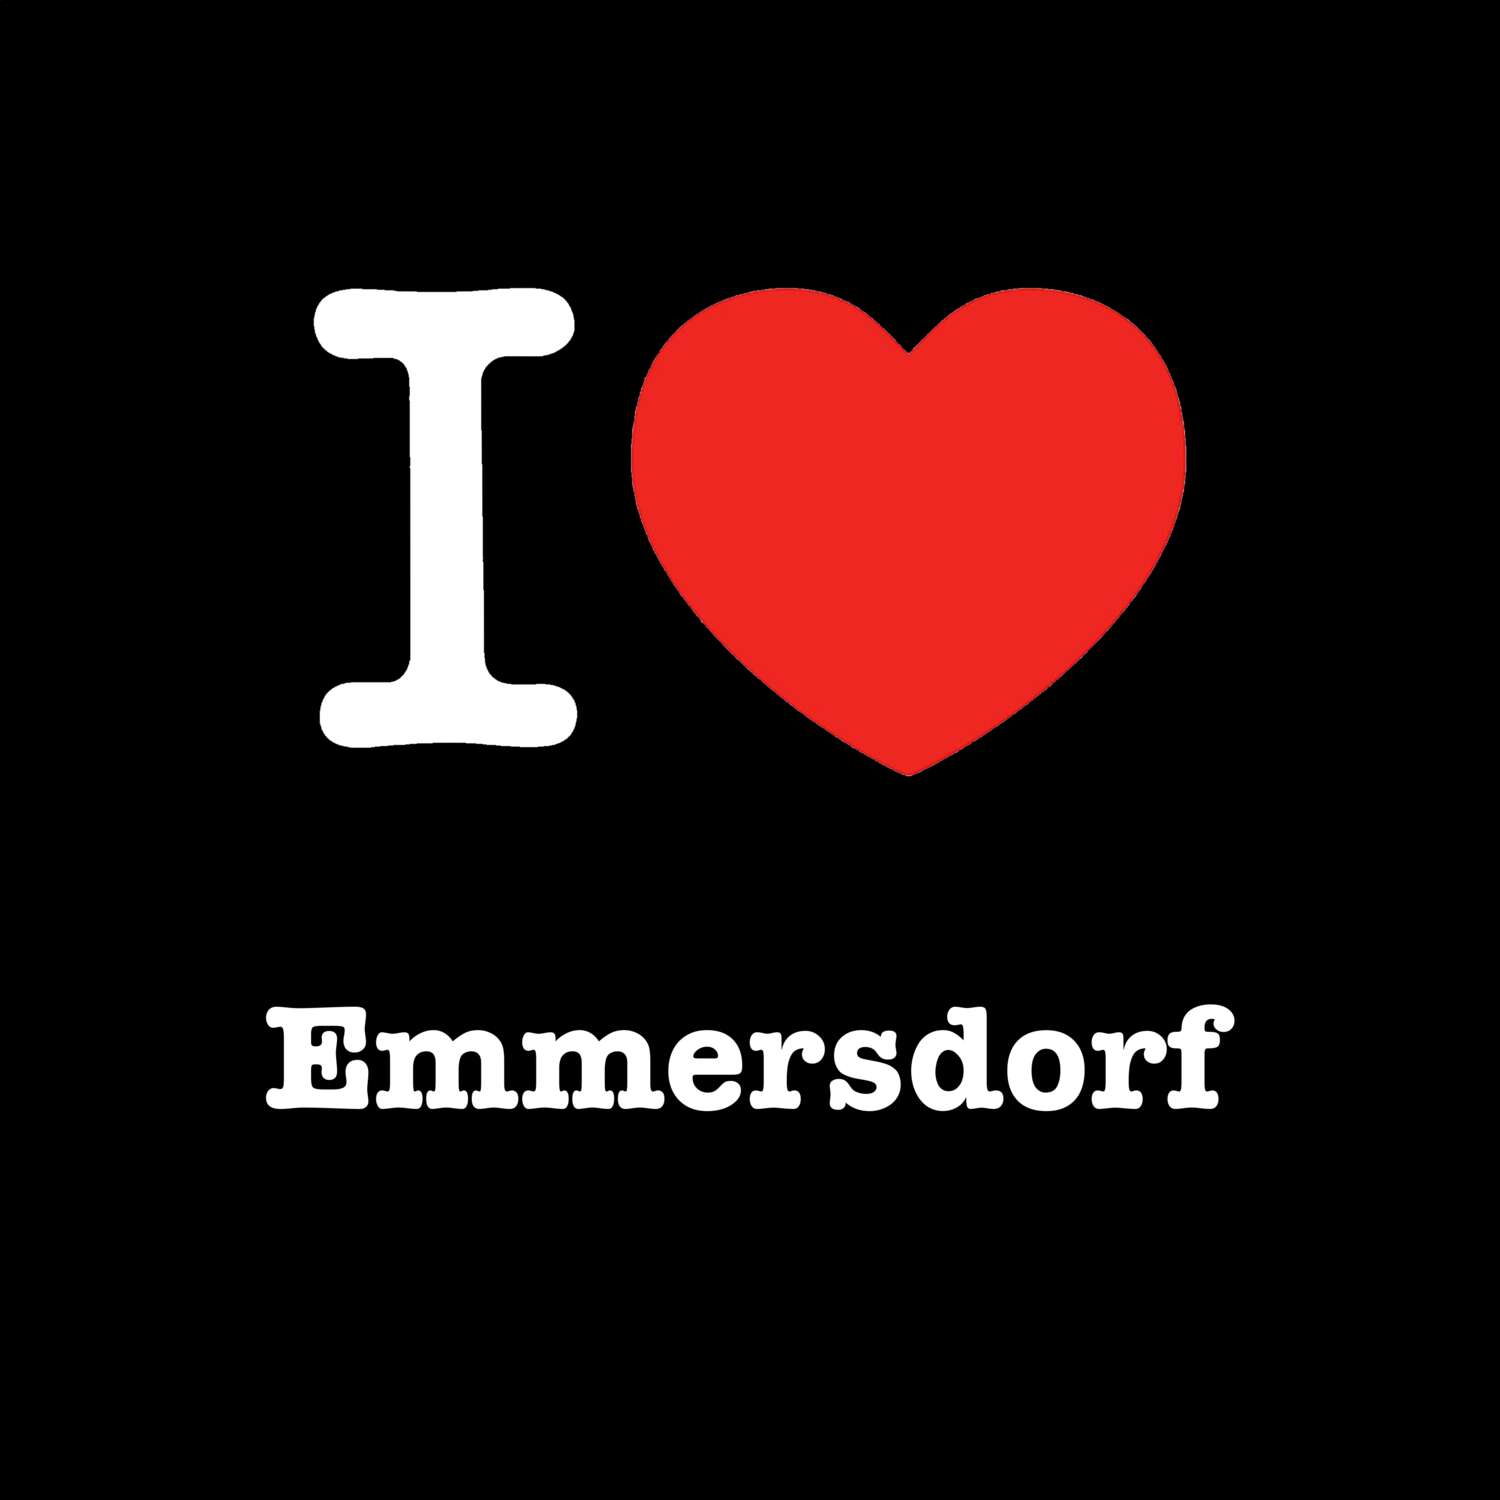 Emmersdorf T-Shirt »I love«